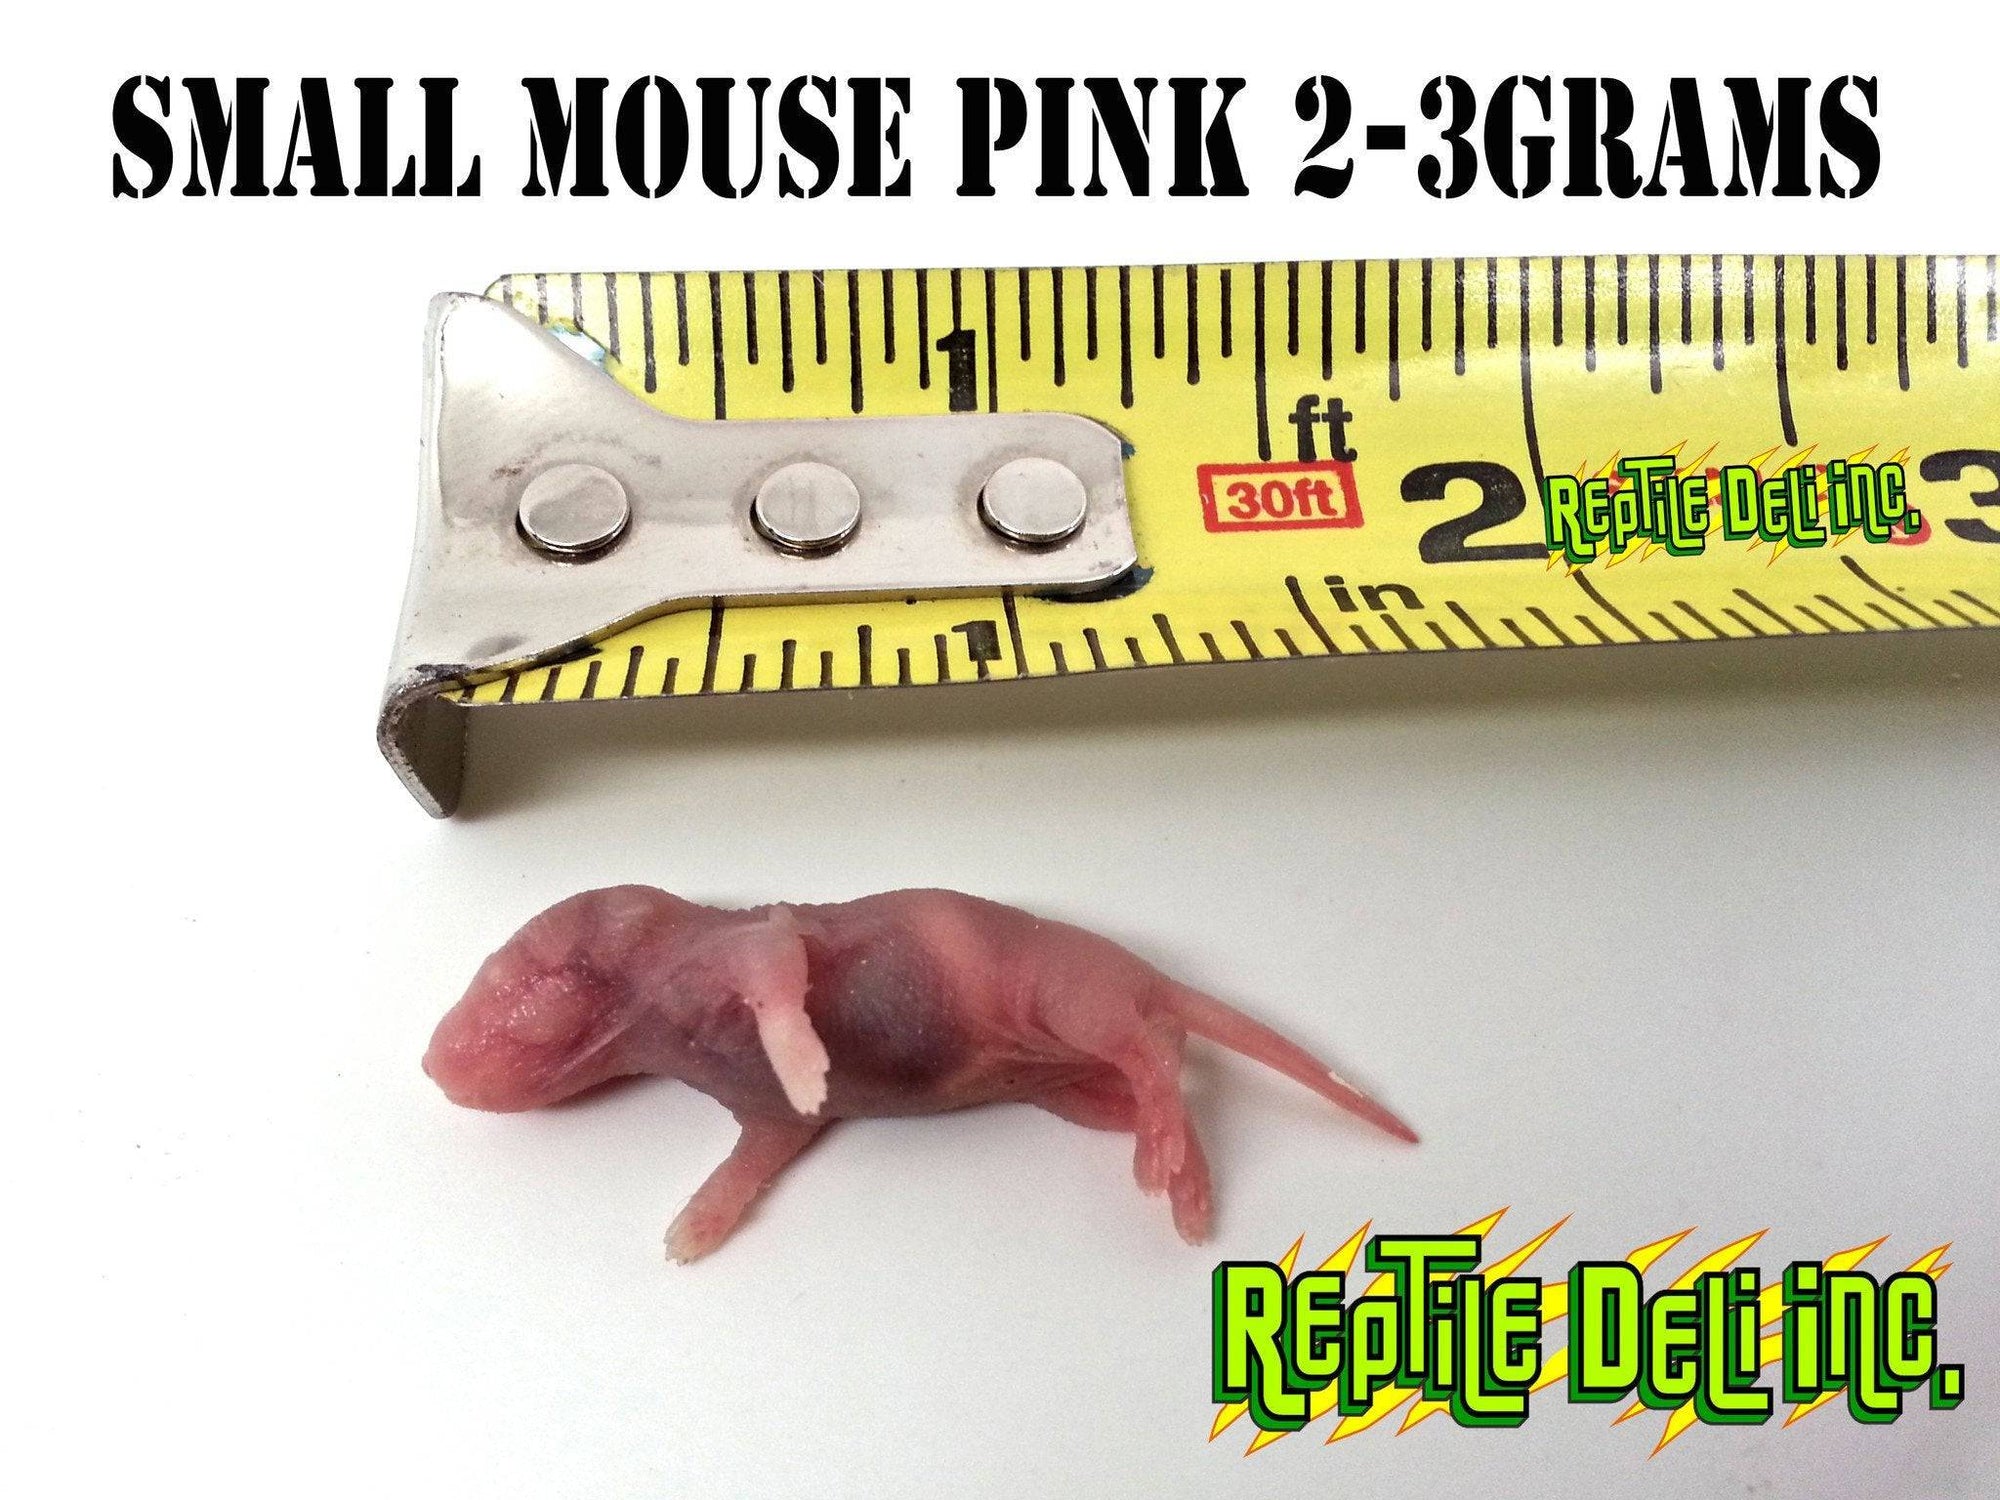 Frozen Mouse - Pinks - Reptile Deli Inc.